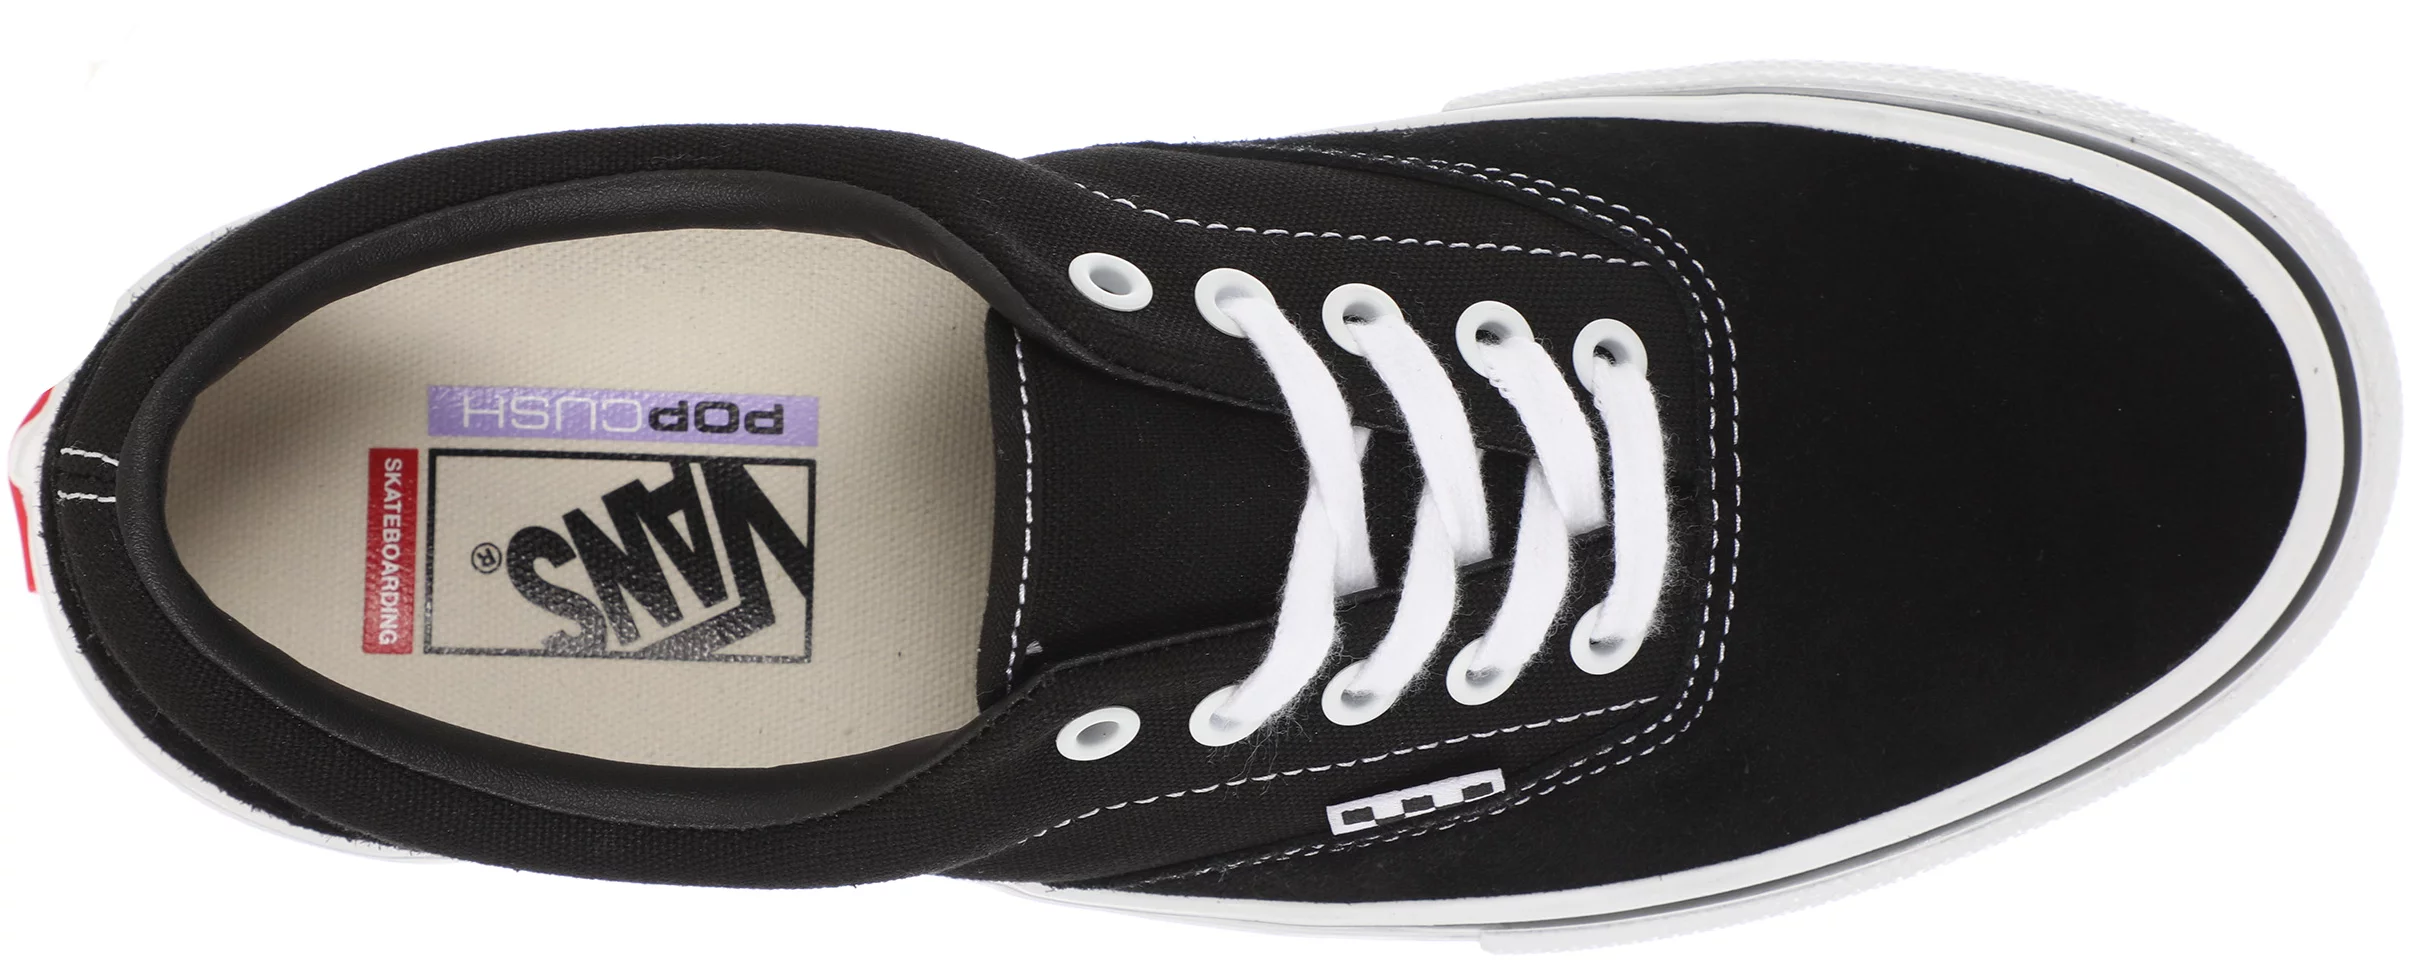 instructeur Chemicus Klant Vans Skate Era Shoes - black/white - Free Shipping | Tactics